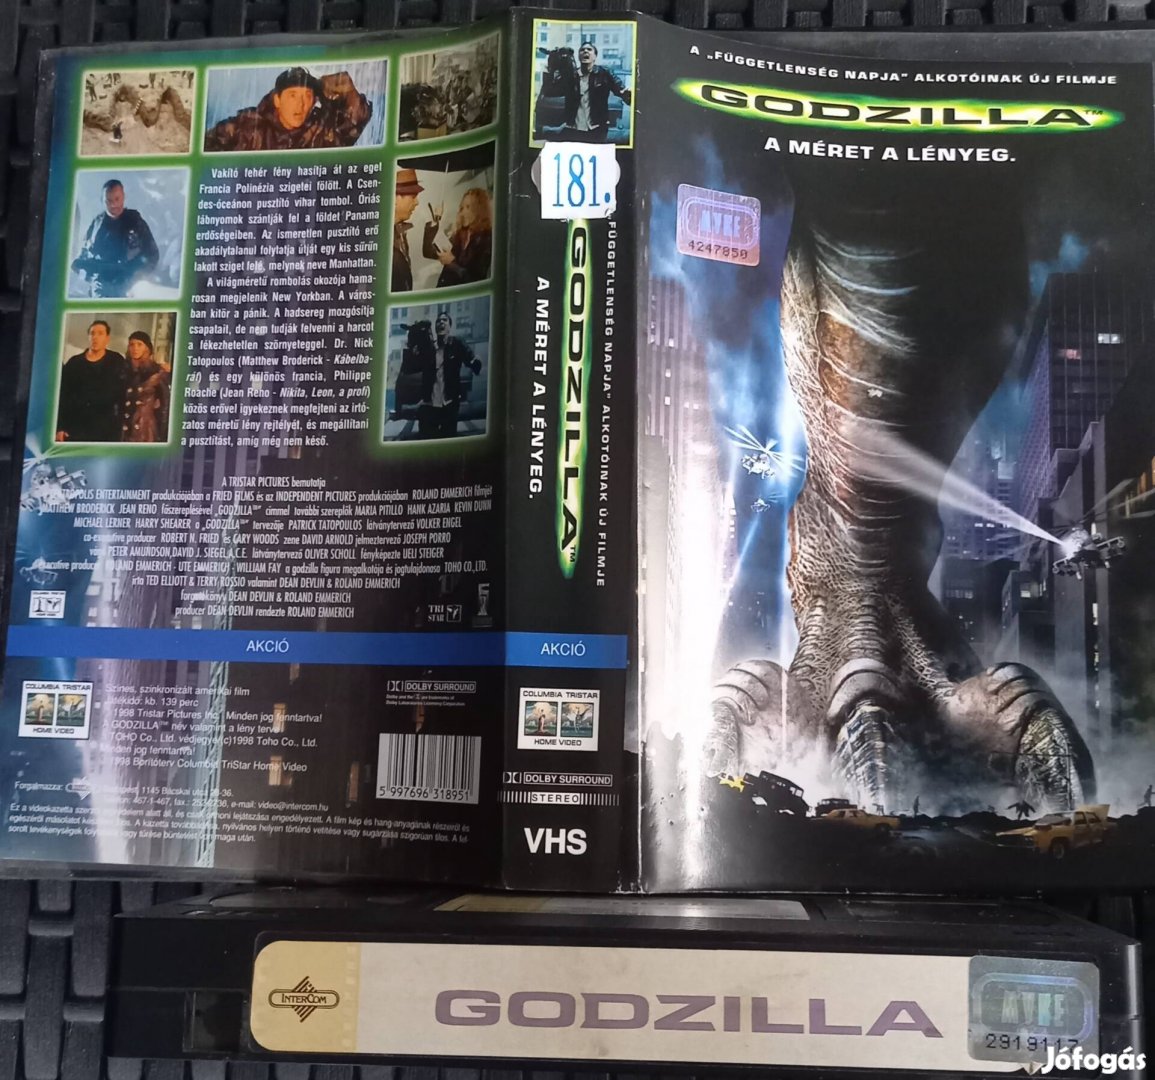 Godzilla - akció vhs - Jean Reno